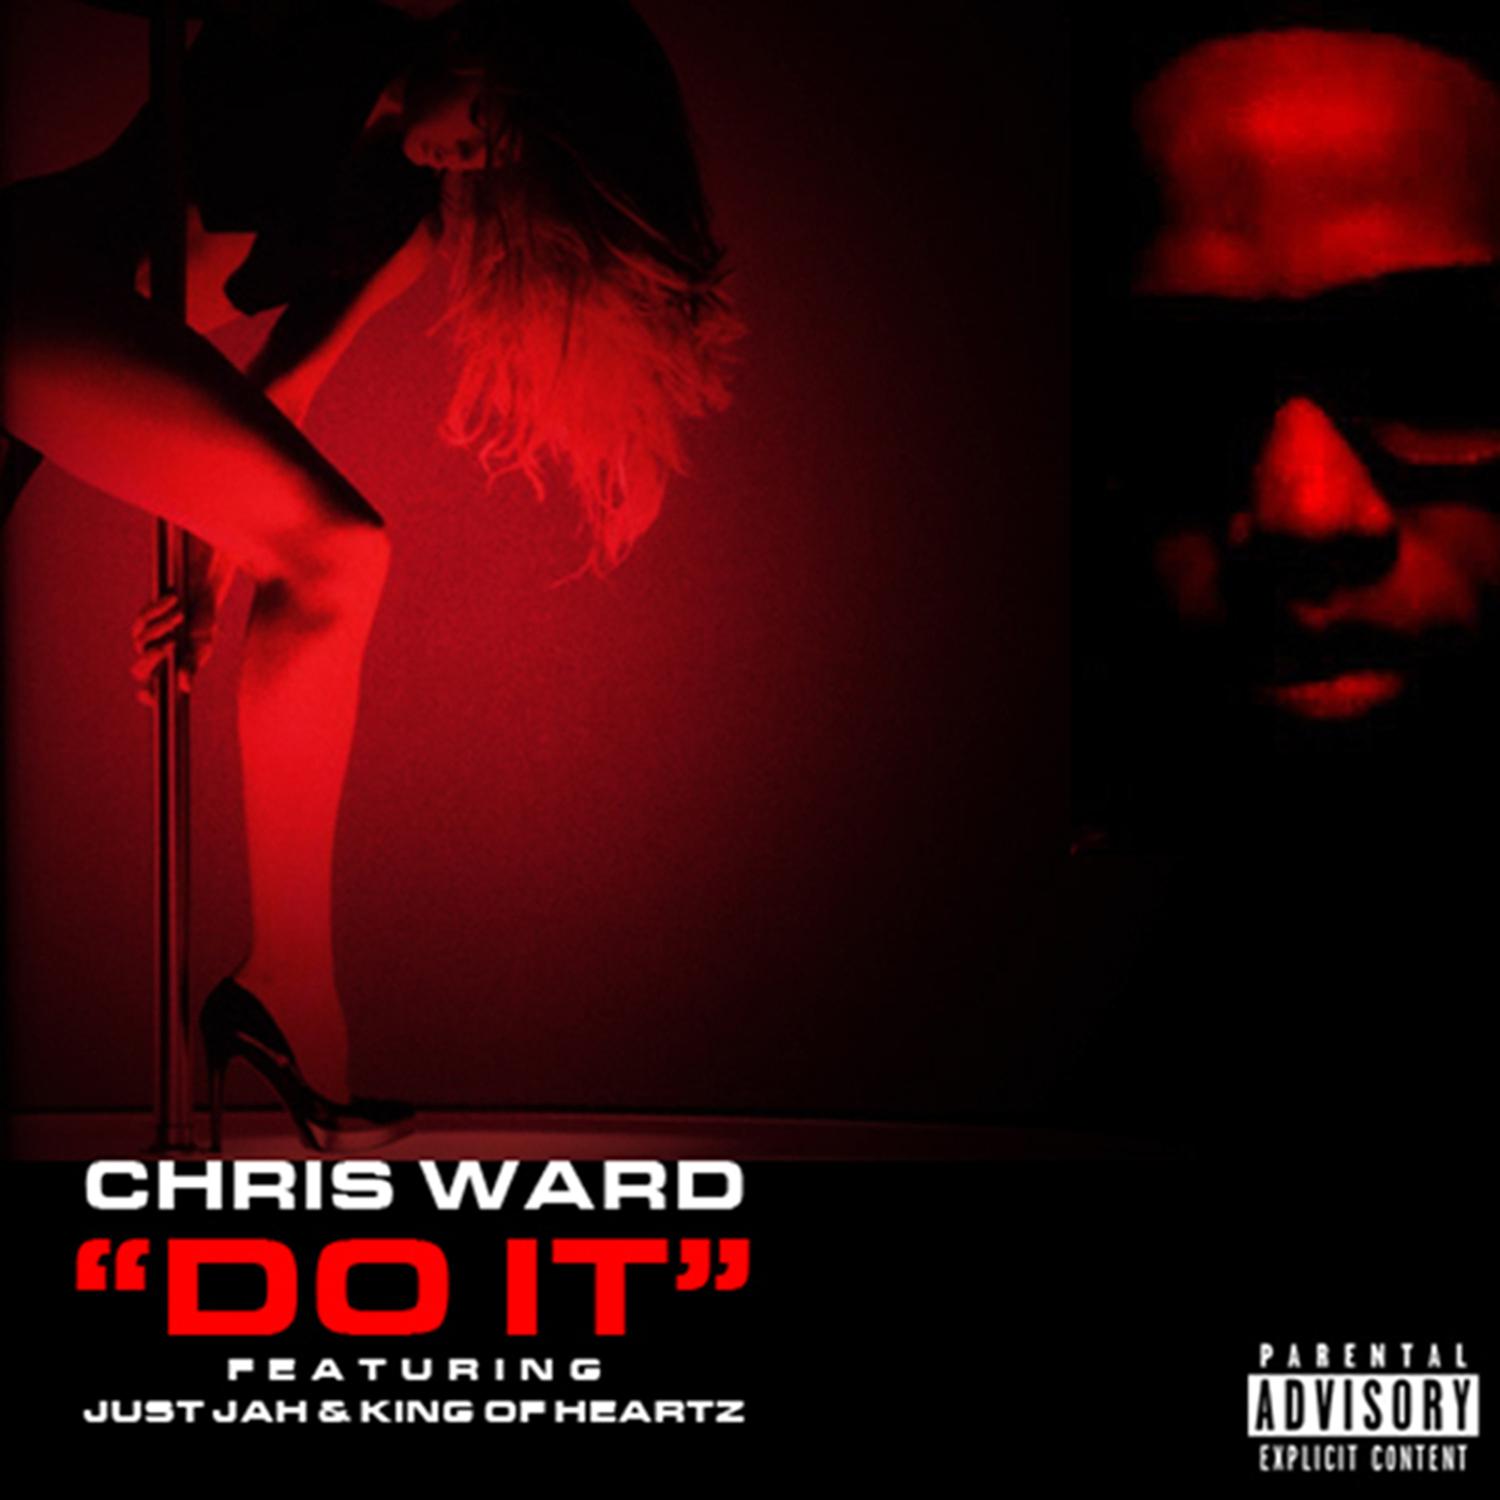 Chris Ward - Do It (feat. Just Jah & King of Heartz)